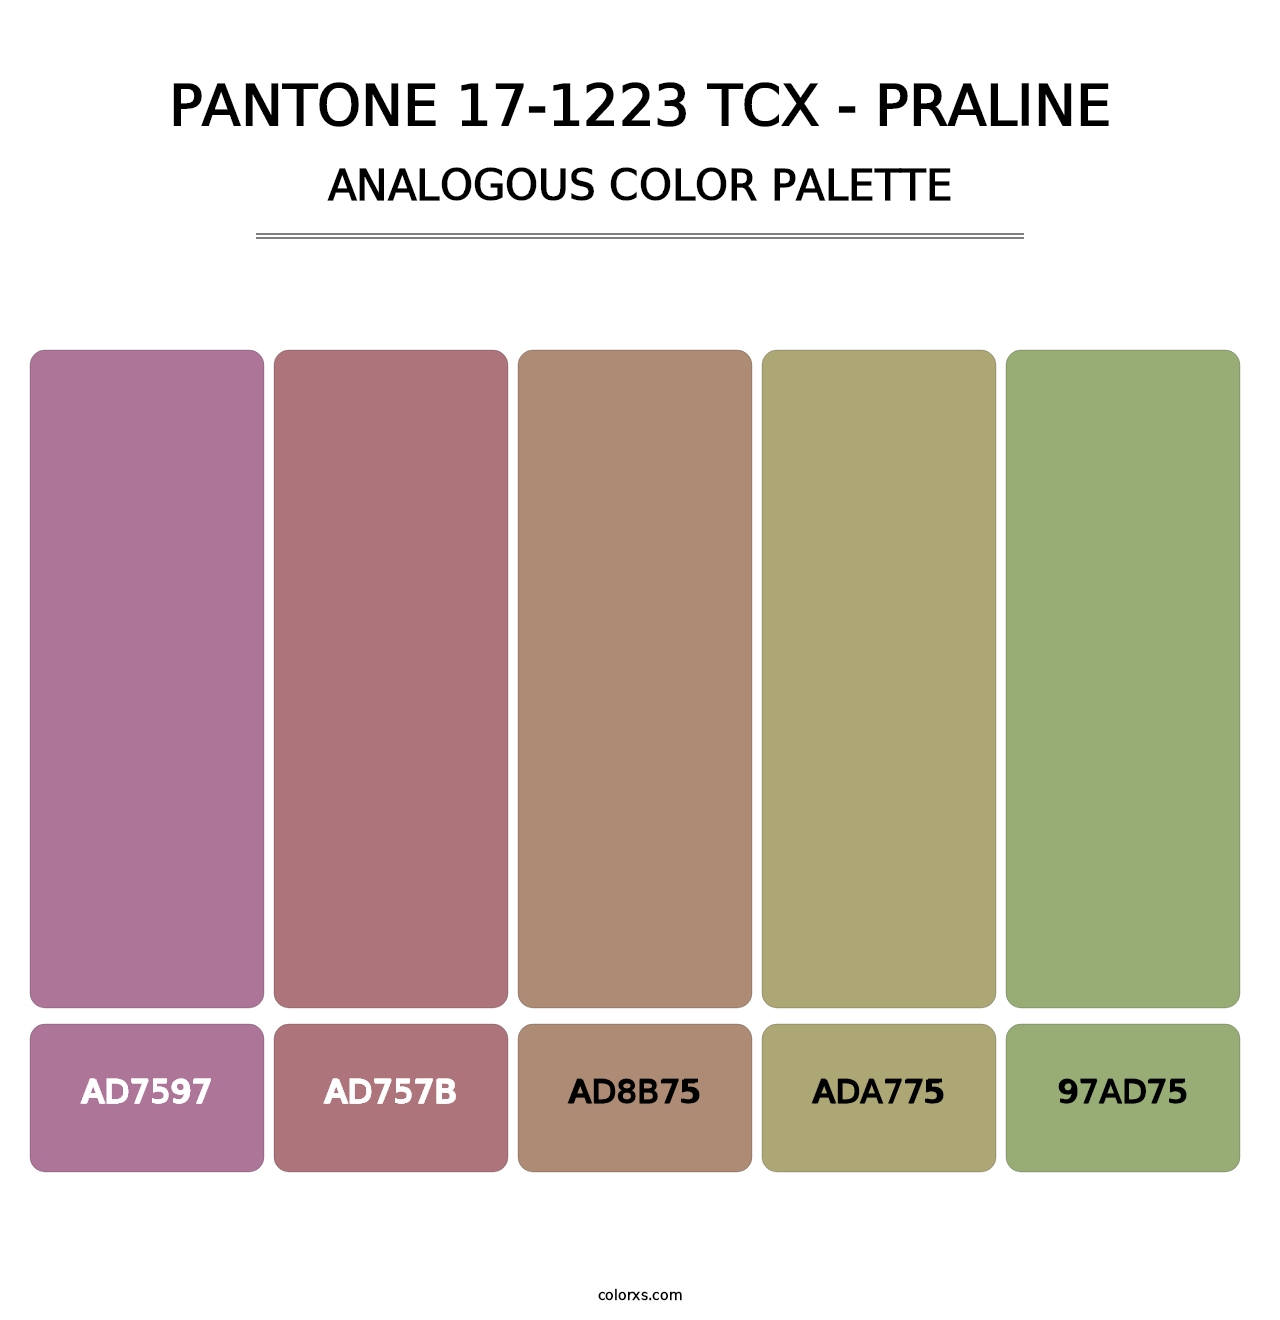 PANTONE 17-1223 TCX - Praline - Analogous Color Palette